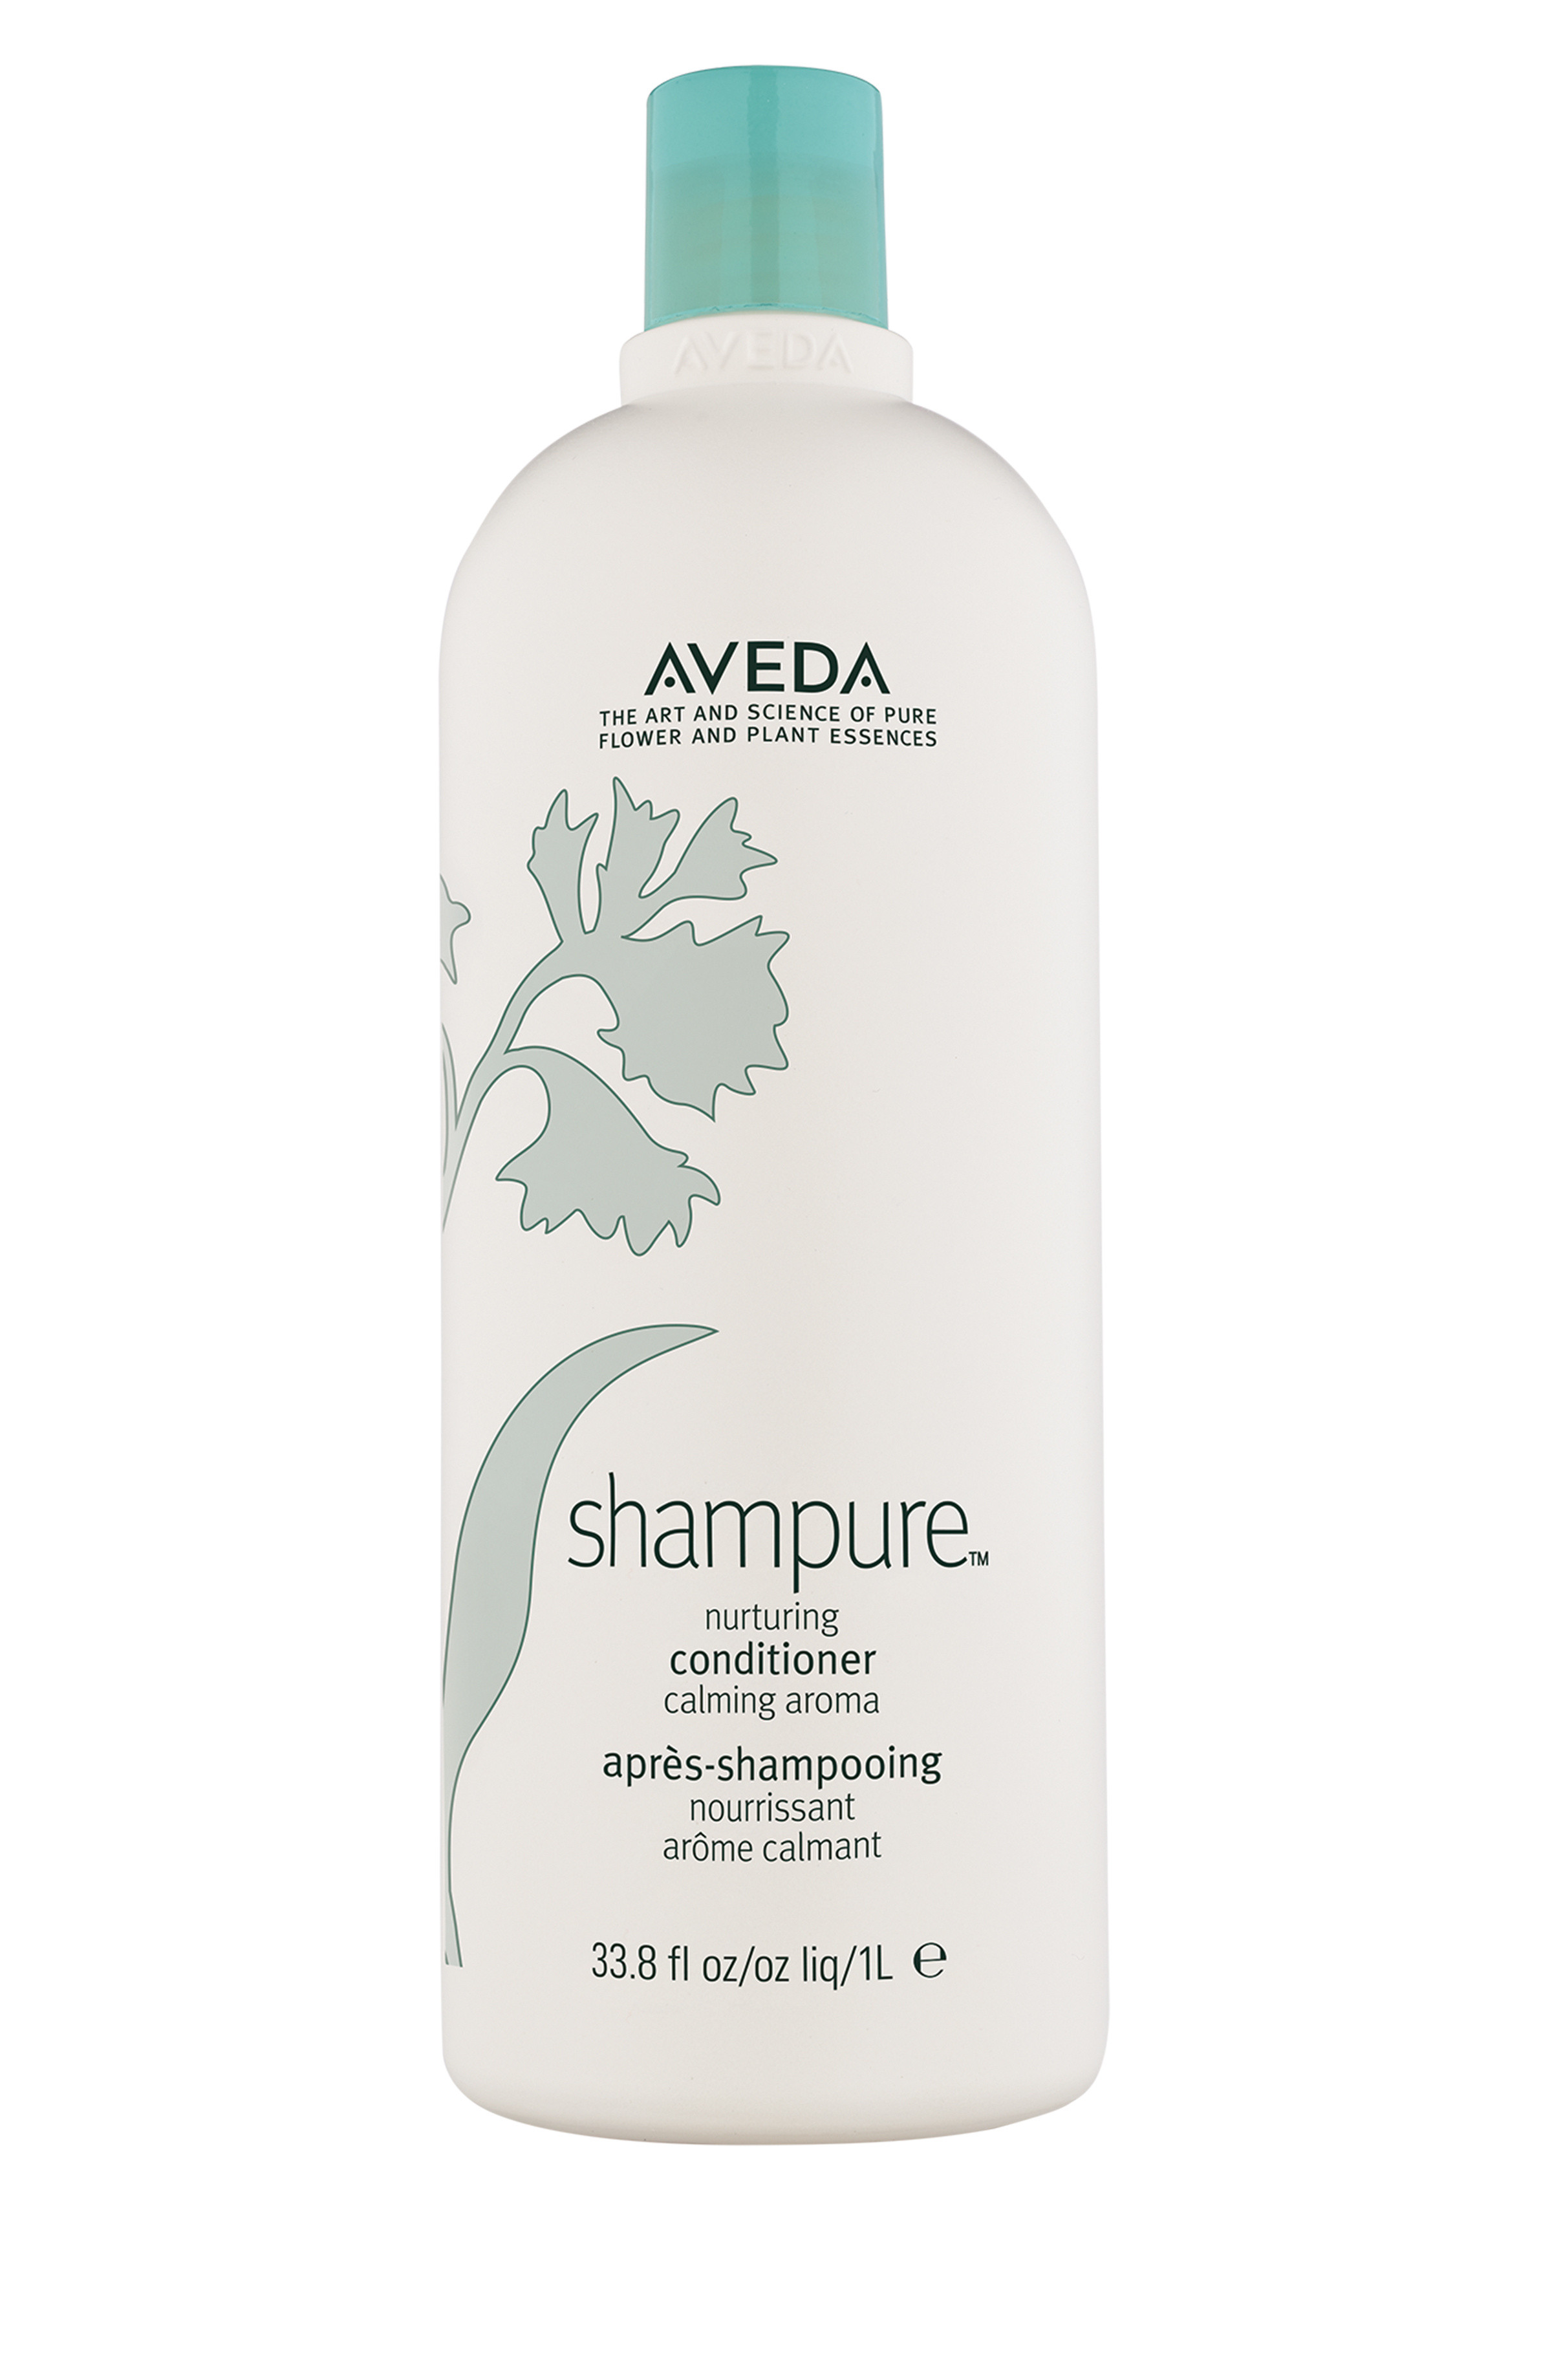 Aveda shampure nurturing conditioner 1  lt, White, large image number 0